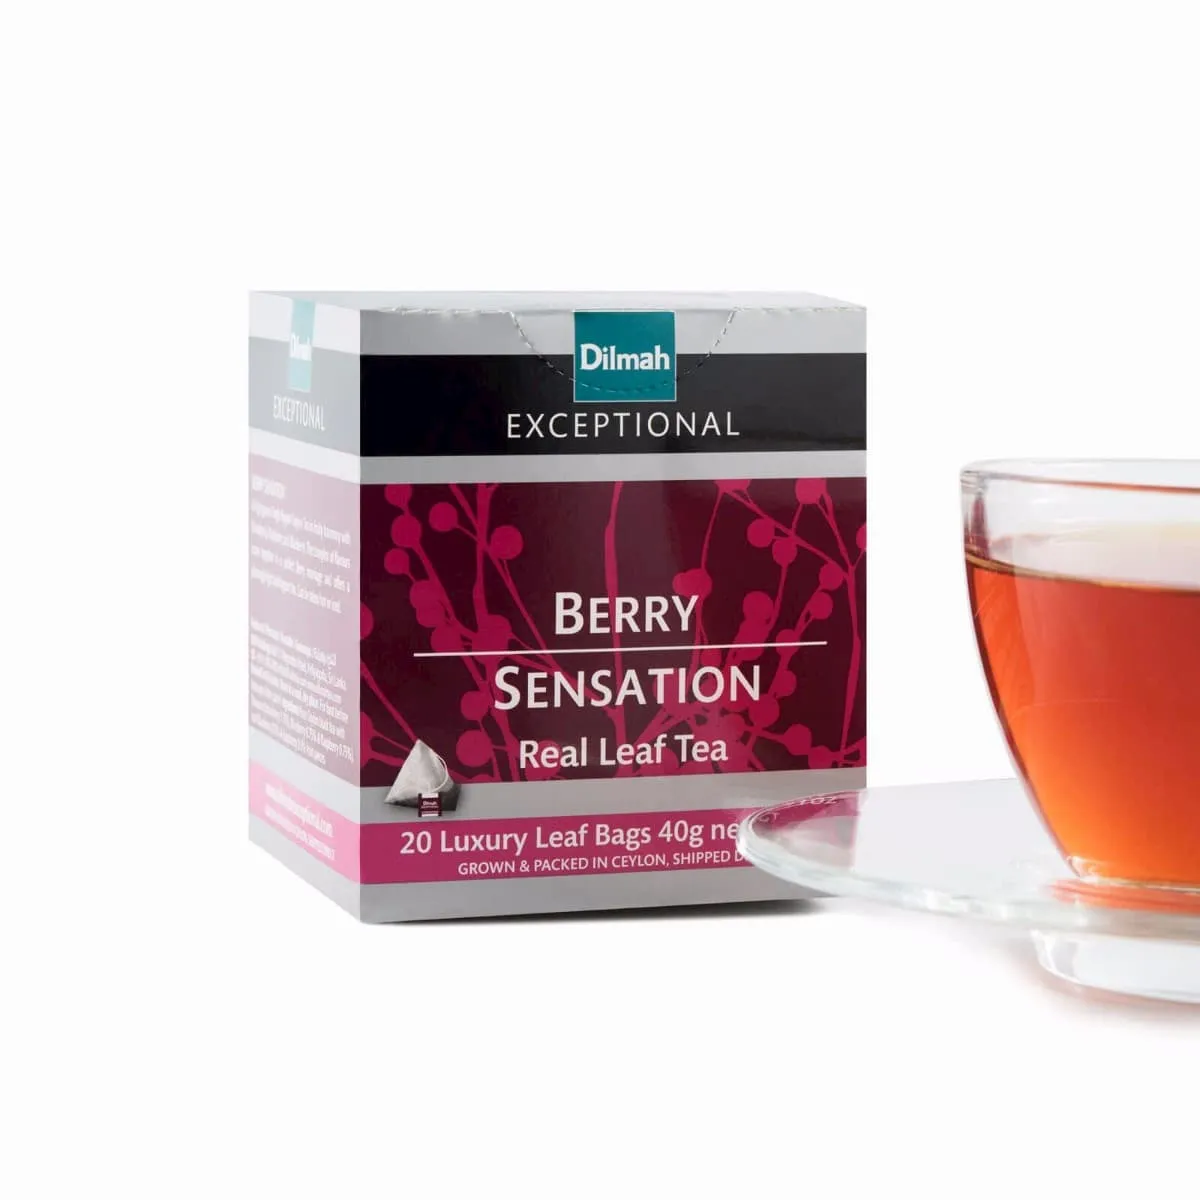 Berry Sensation carton with cup of tea